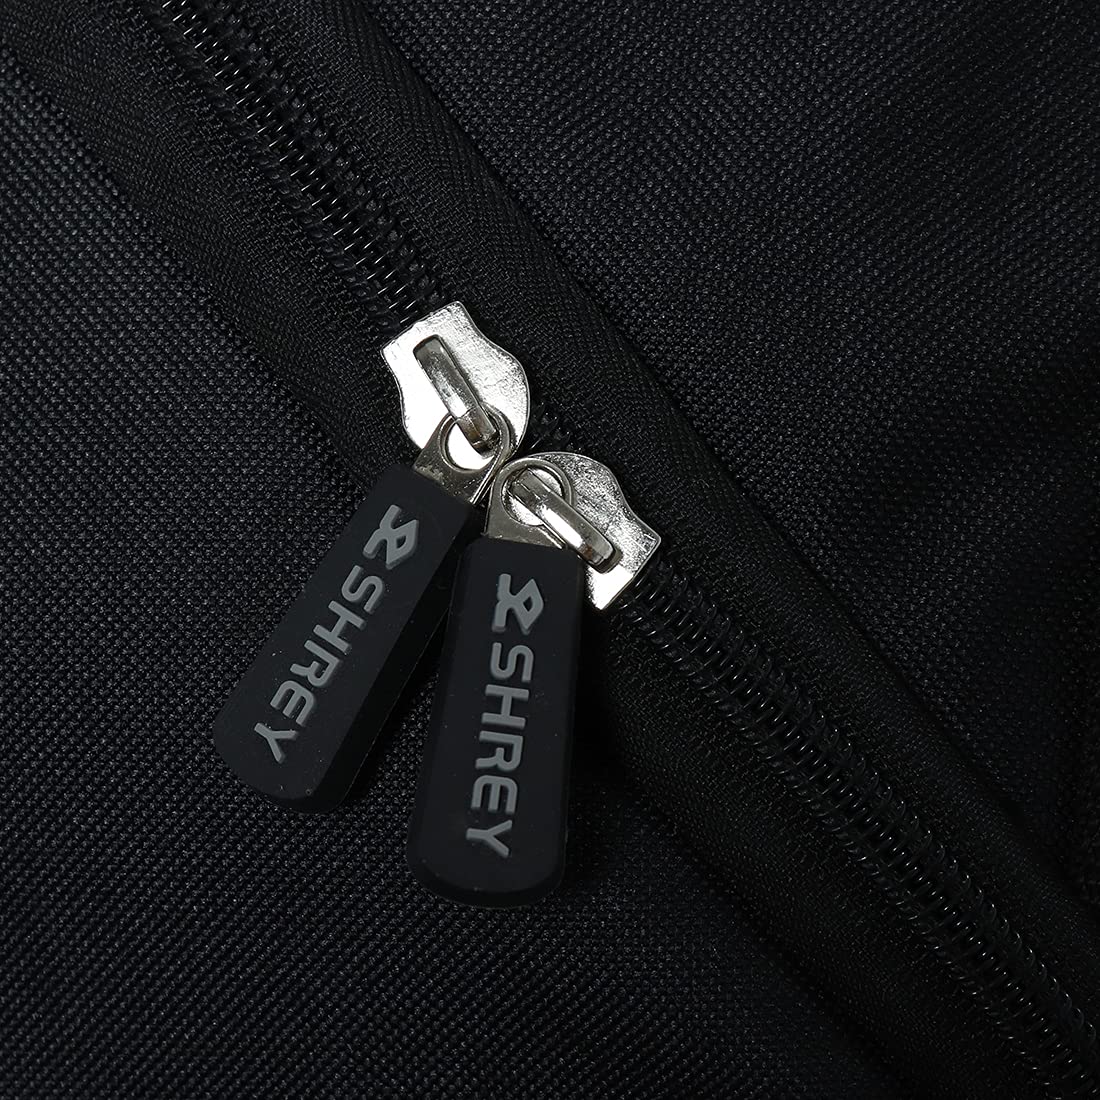 Shrey 1780 Pro Premium Duffle bag - DarkTeal & Yellow - Best Price online Prokicksports.com